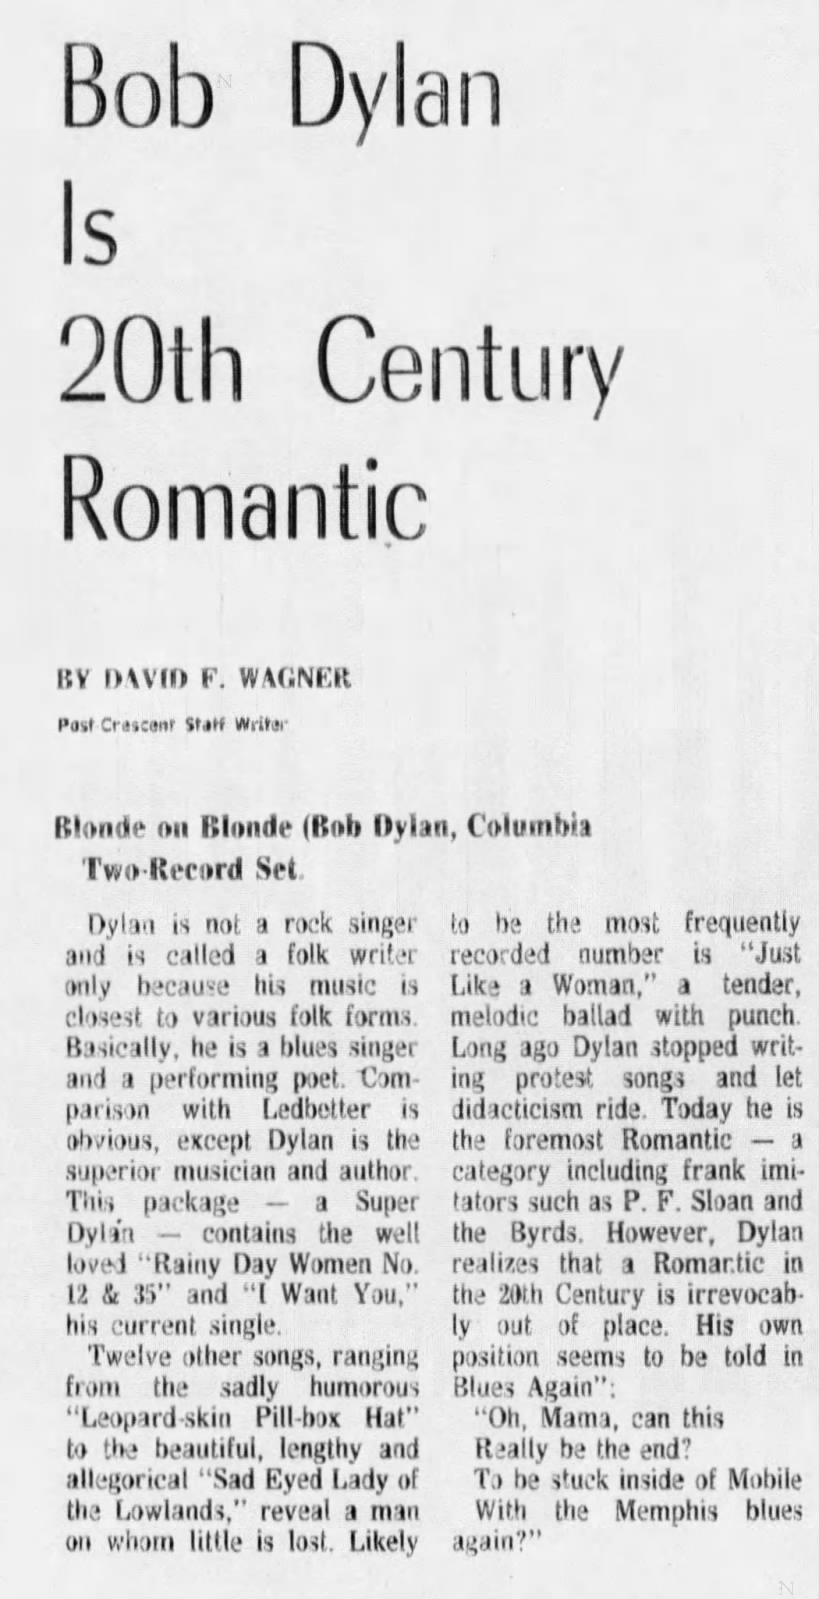 Bob Dylan is 20th Century Romantic